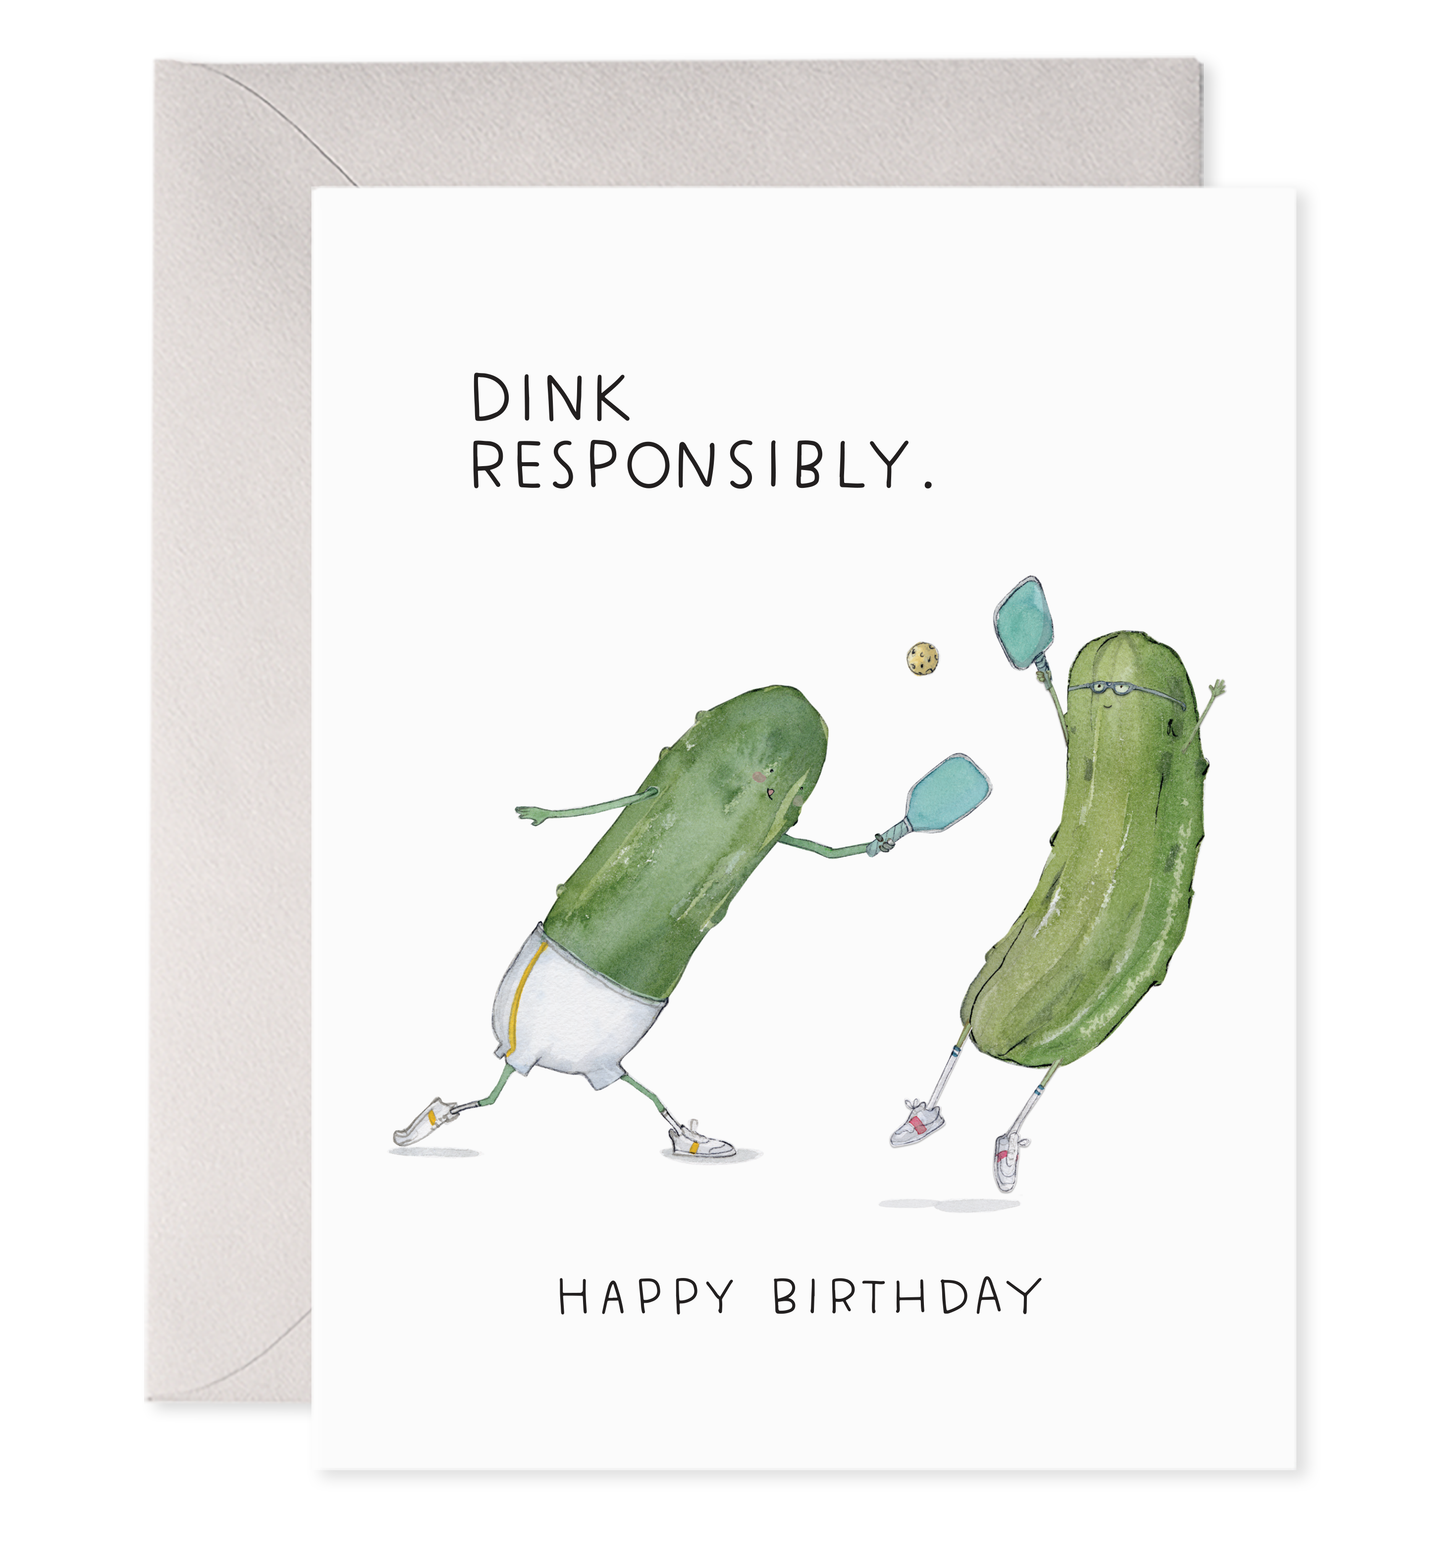 Pickleball Bday | Pickle Birthday Card…dink responsibly